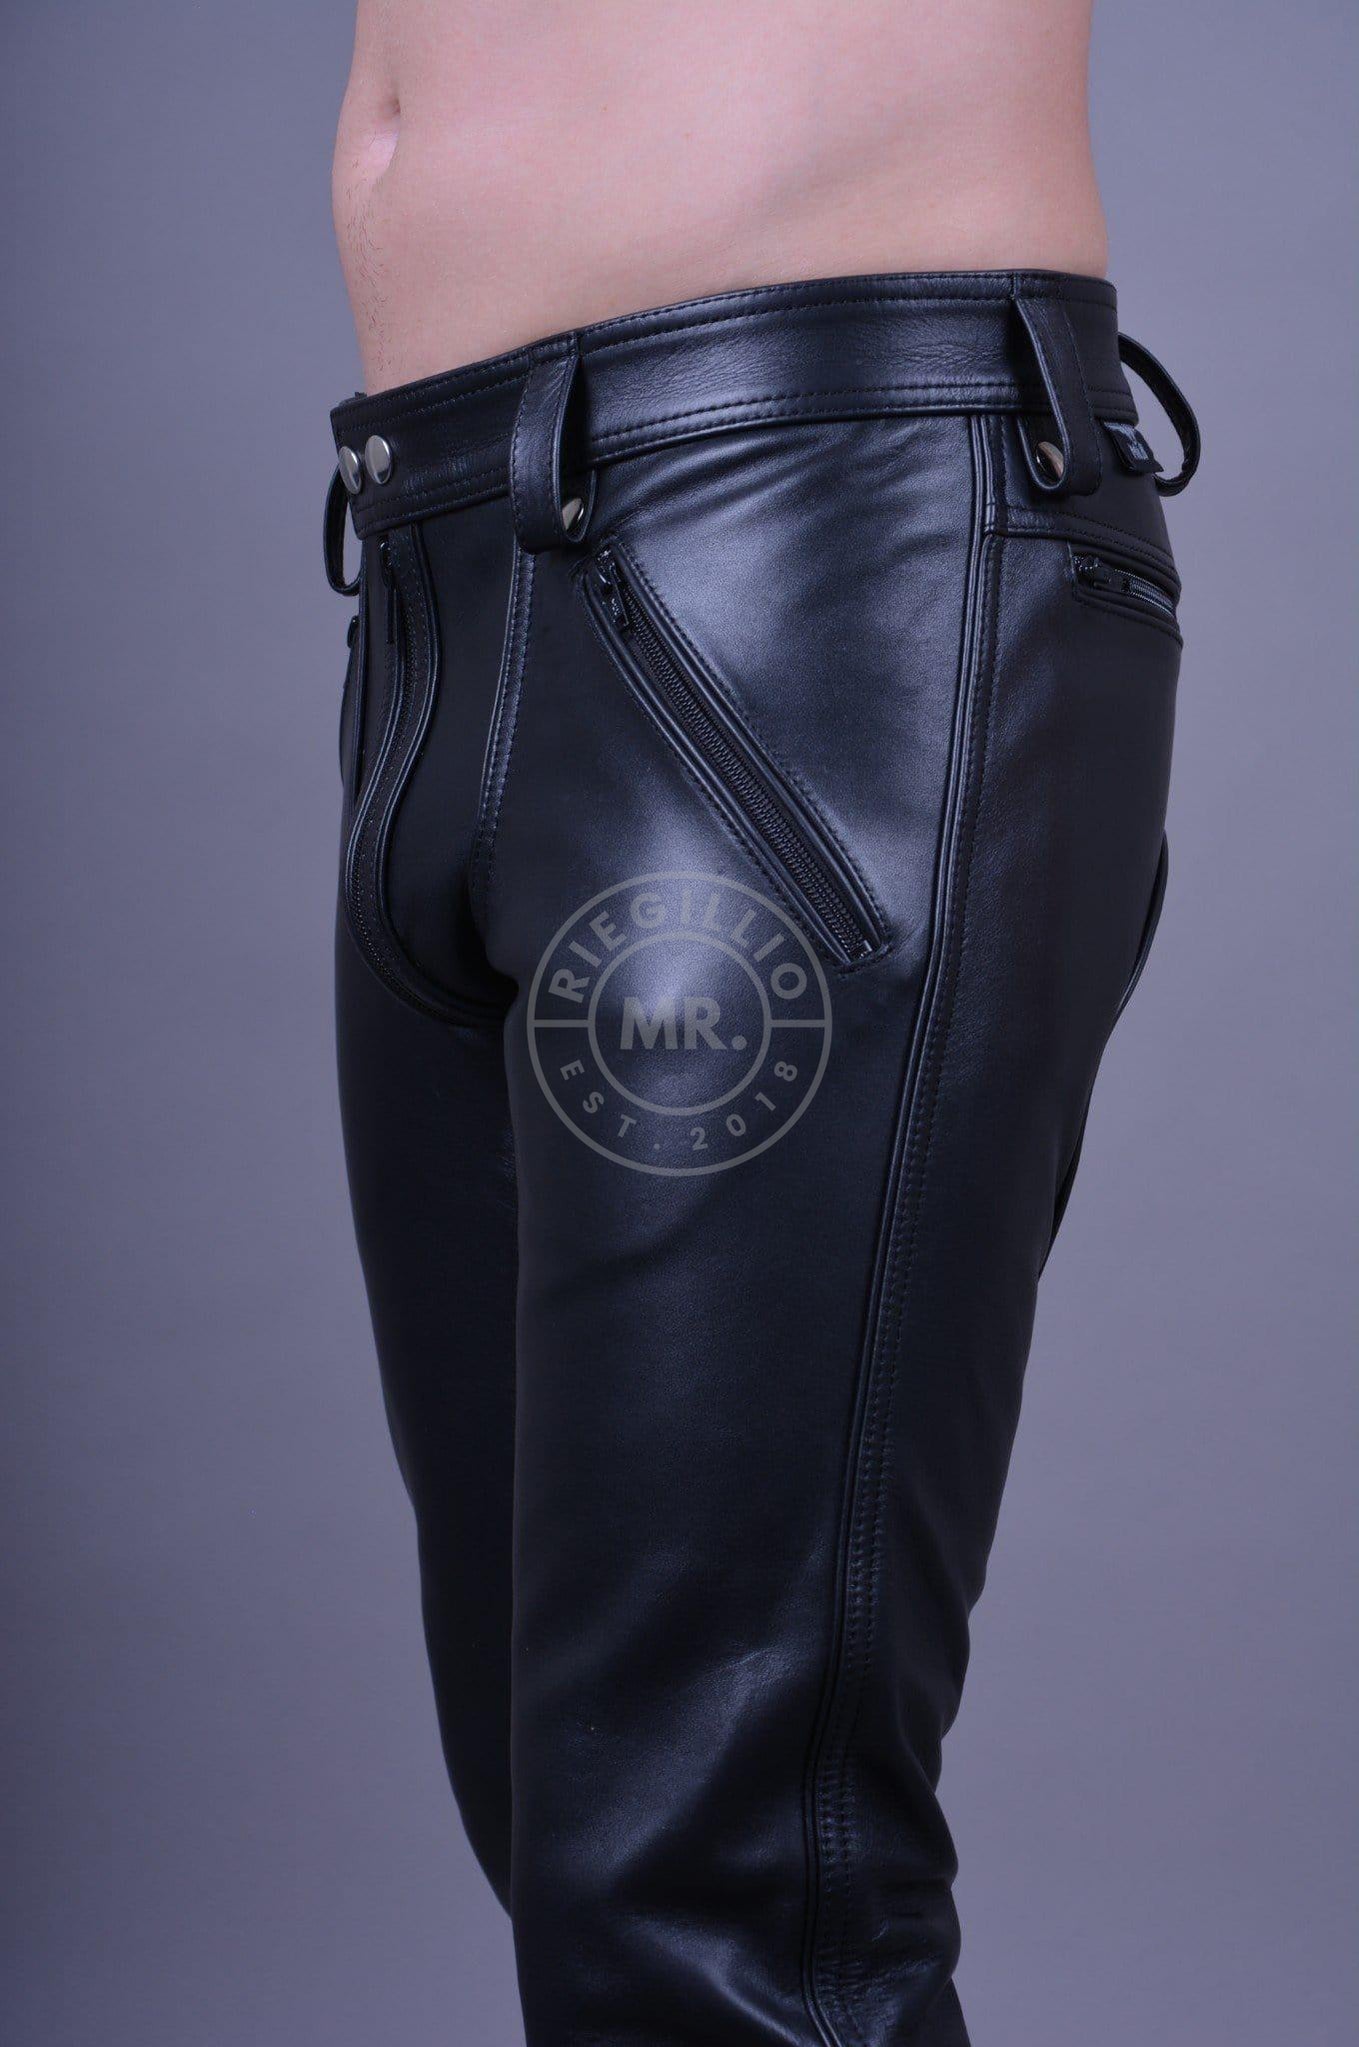 Mister B Leather FXXXer Jeans All Black by MR. Riegillio